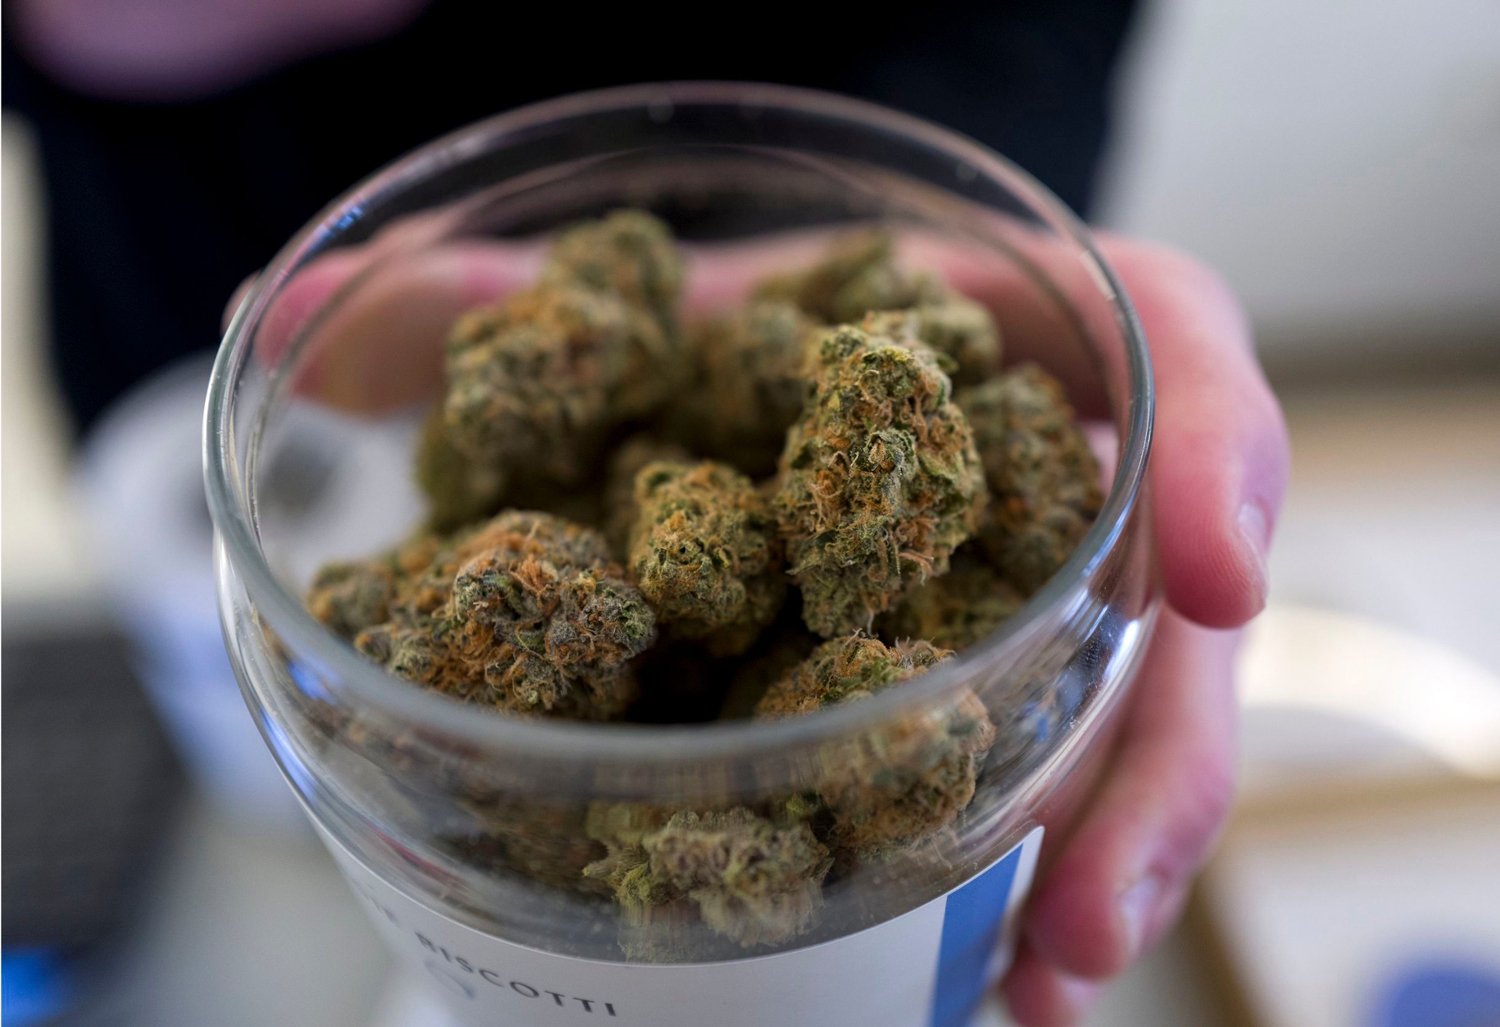 Marijuana Dispensaries Have No Impact on Crime Rates, Says Study